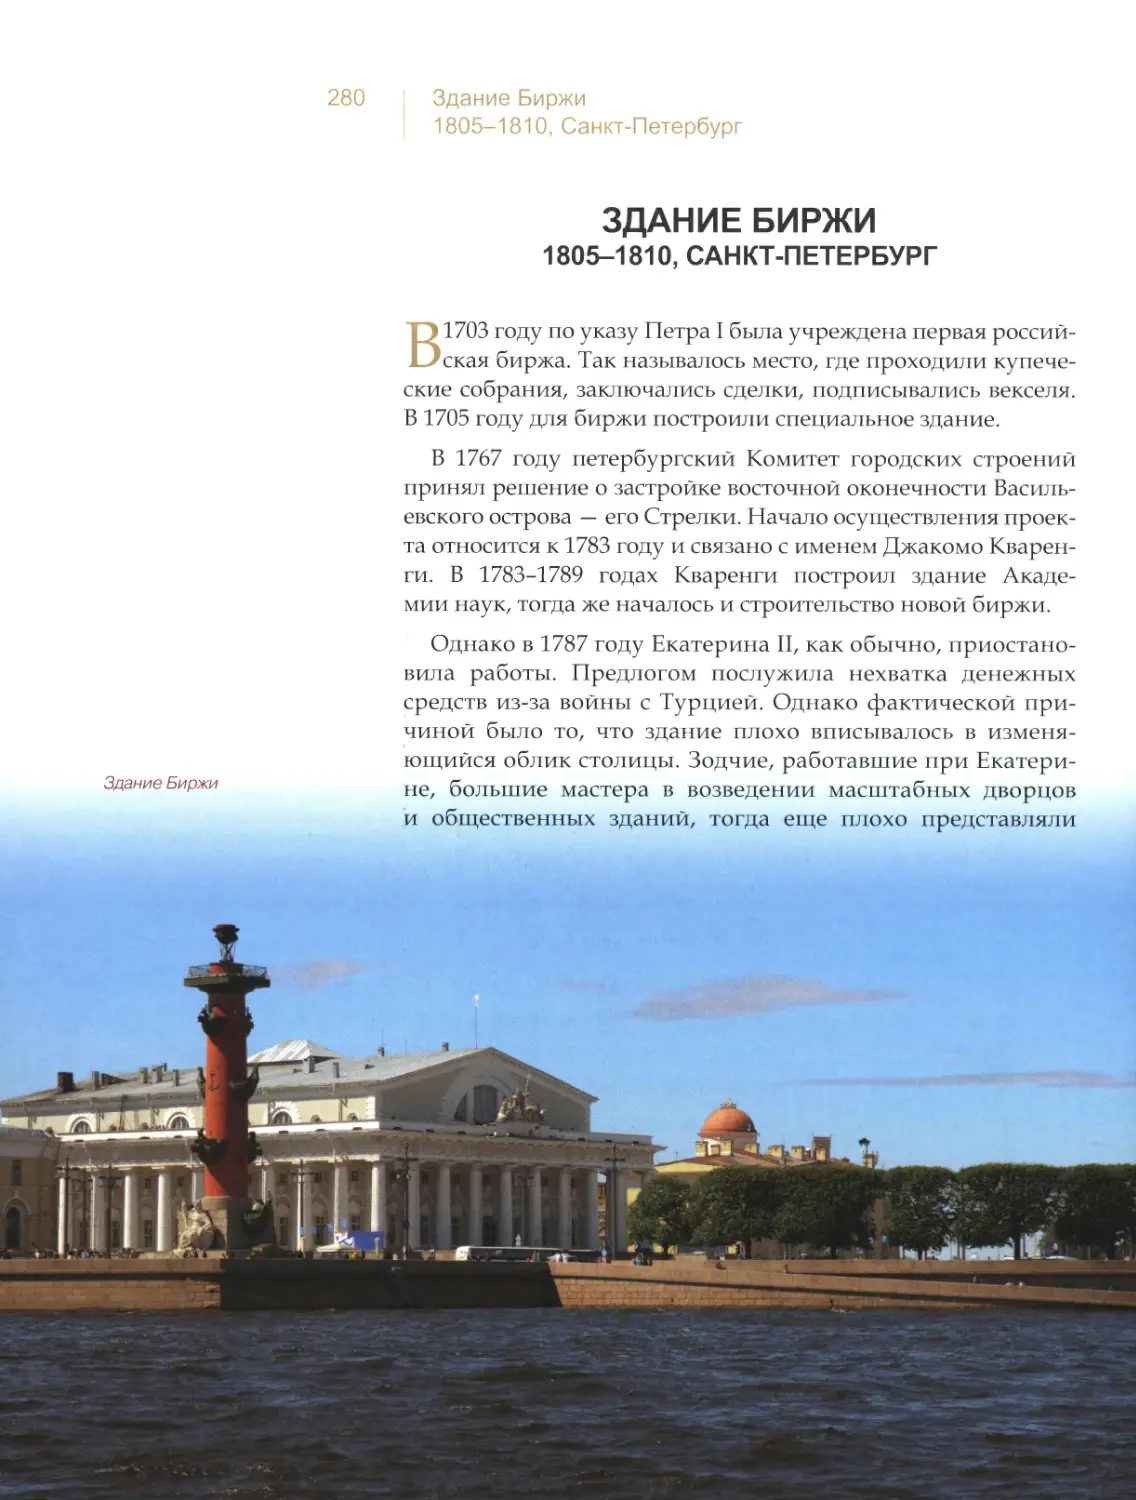 Здание Биржи, Санкт-Петербург